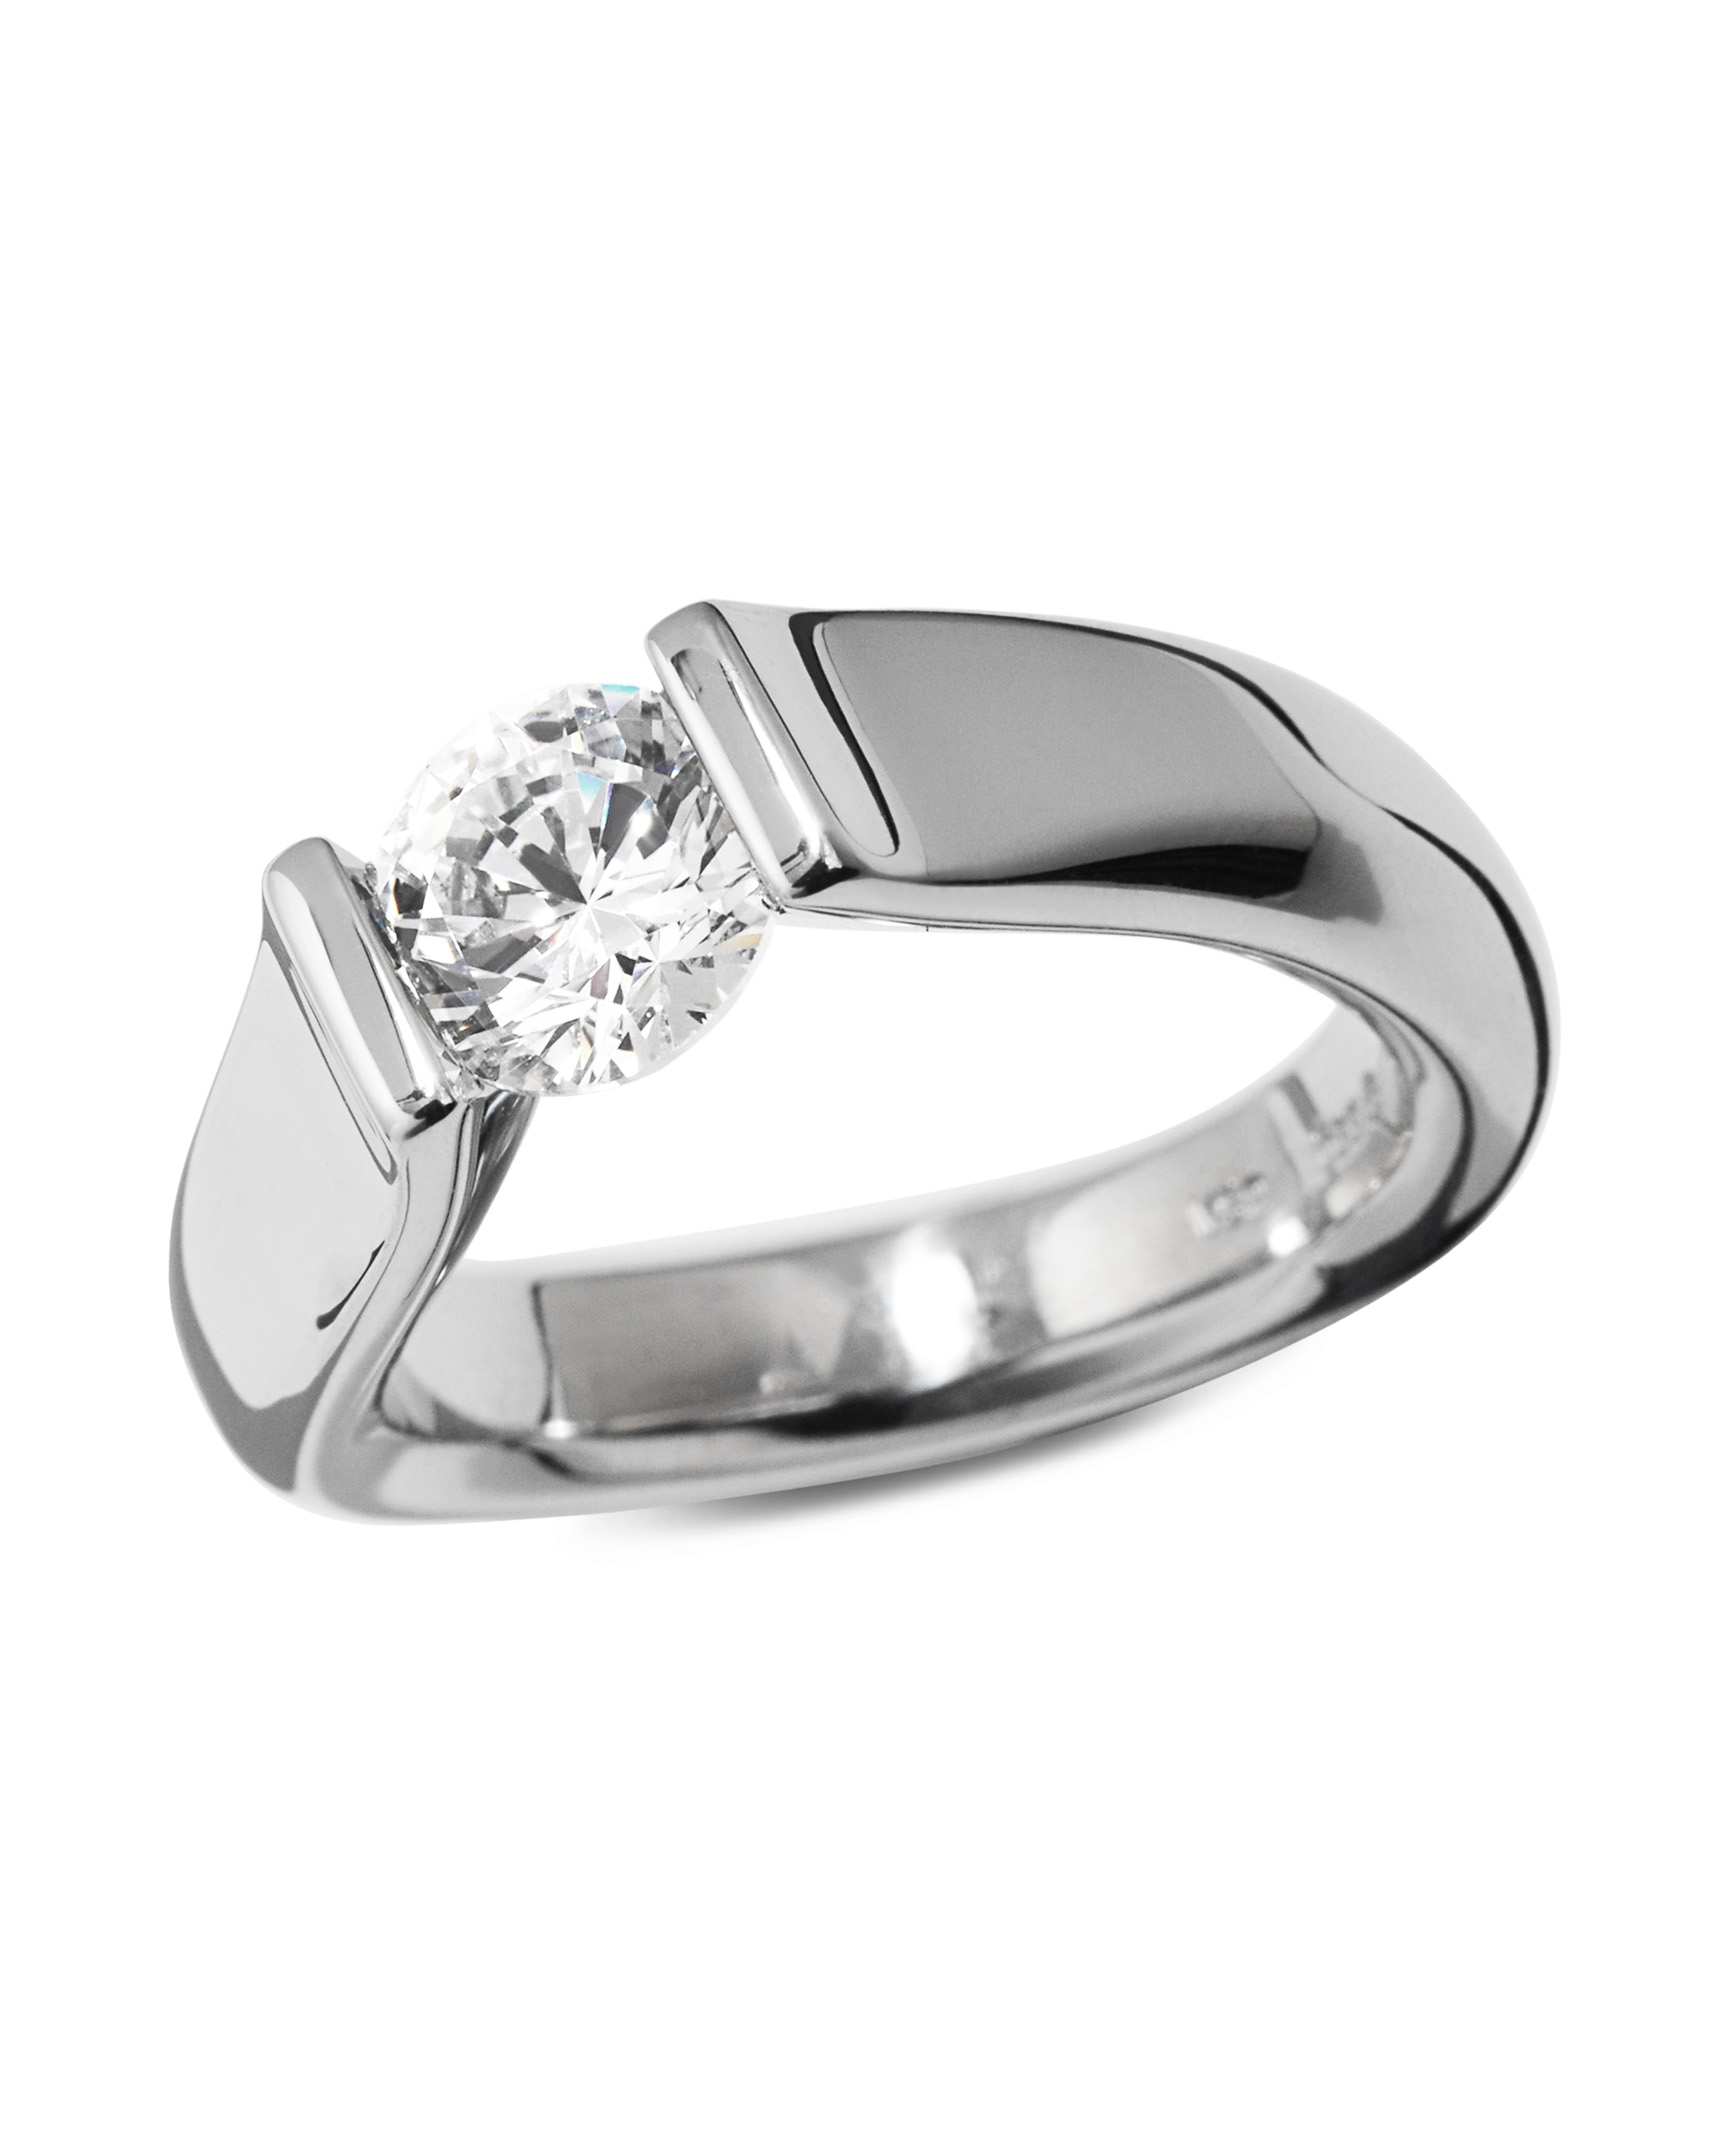 Tension Wedding Ring - Wedding Rings Sets Ideas